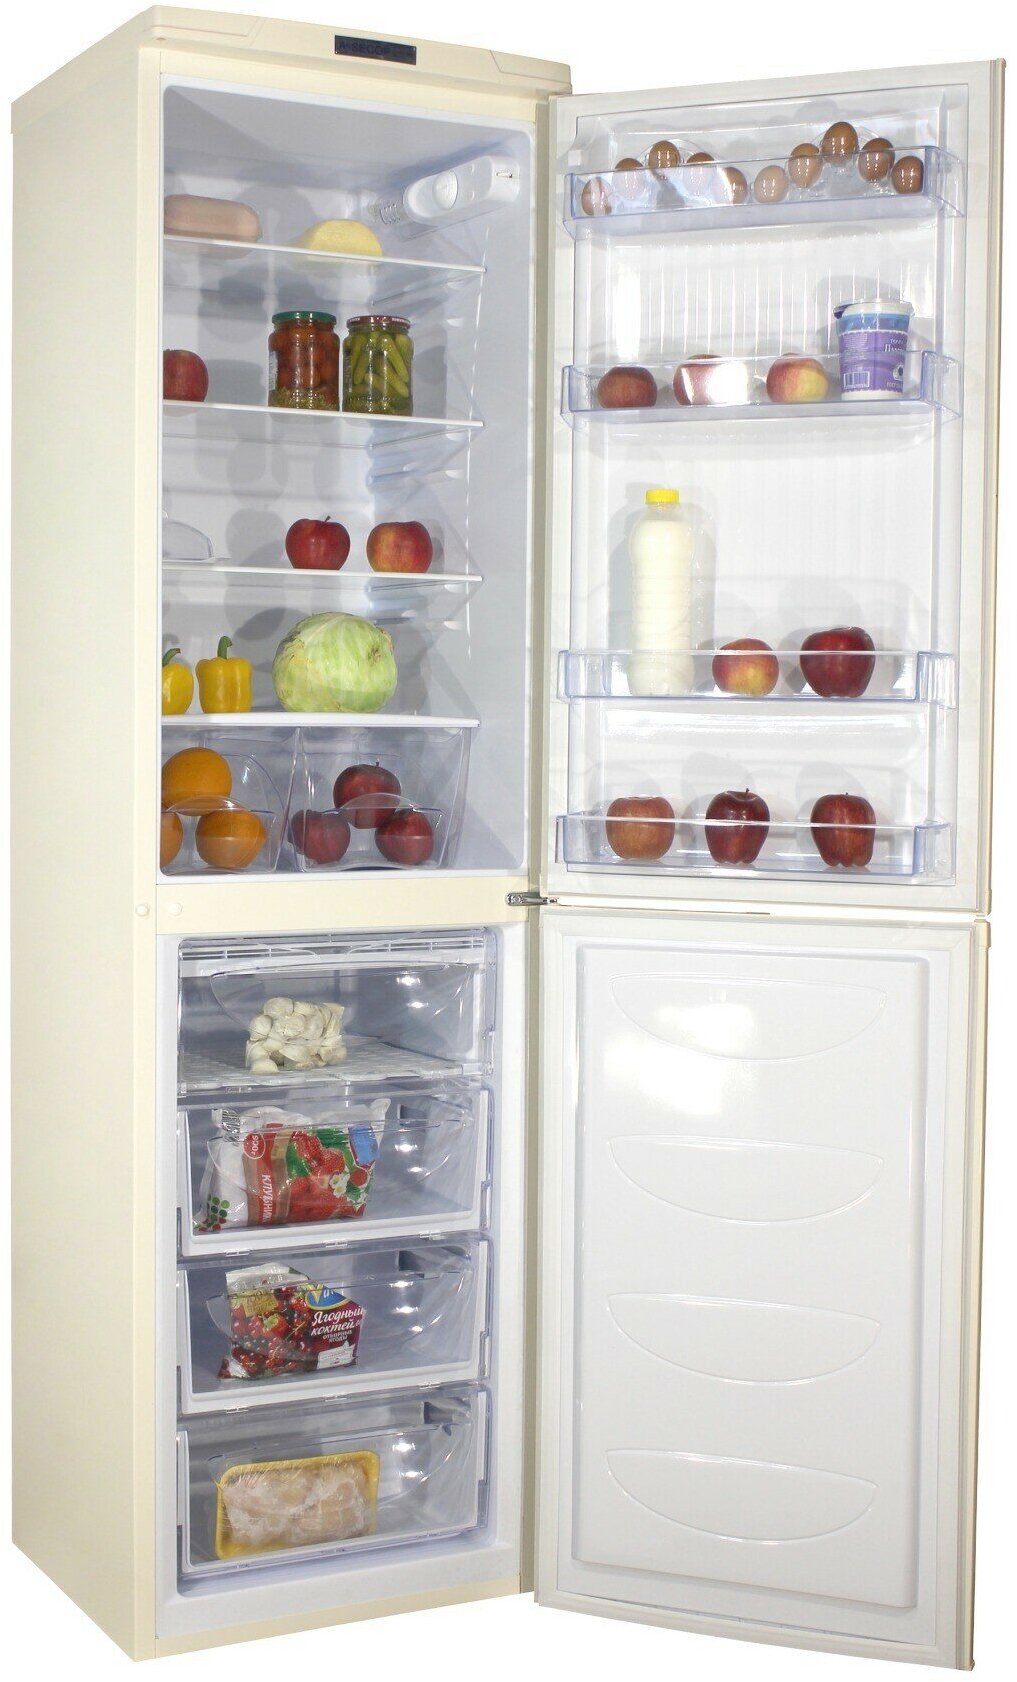 Холодильник DON R 297